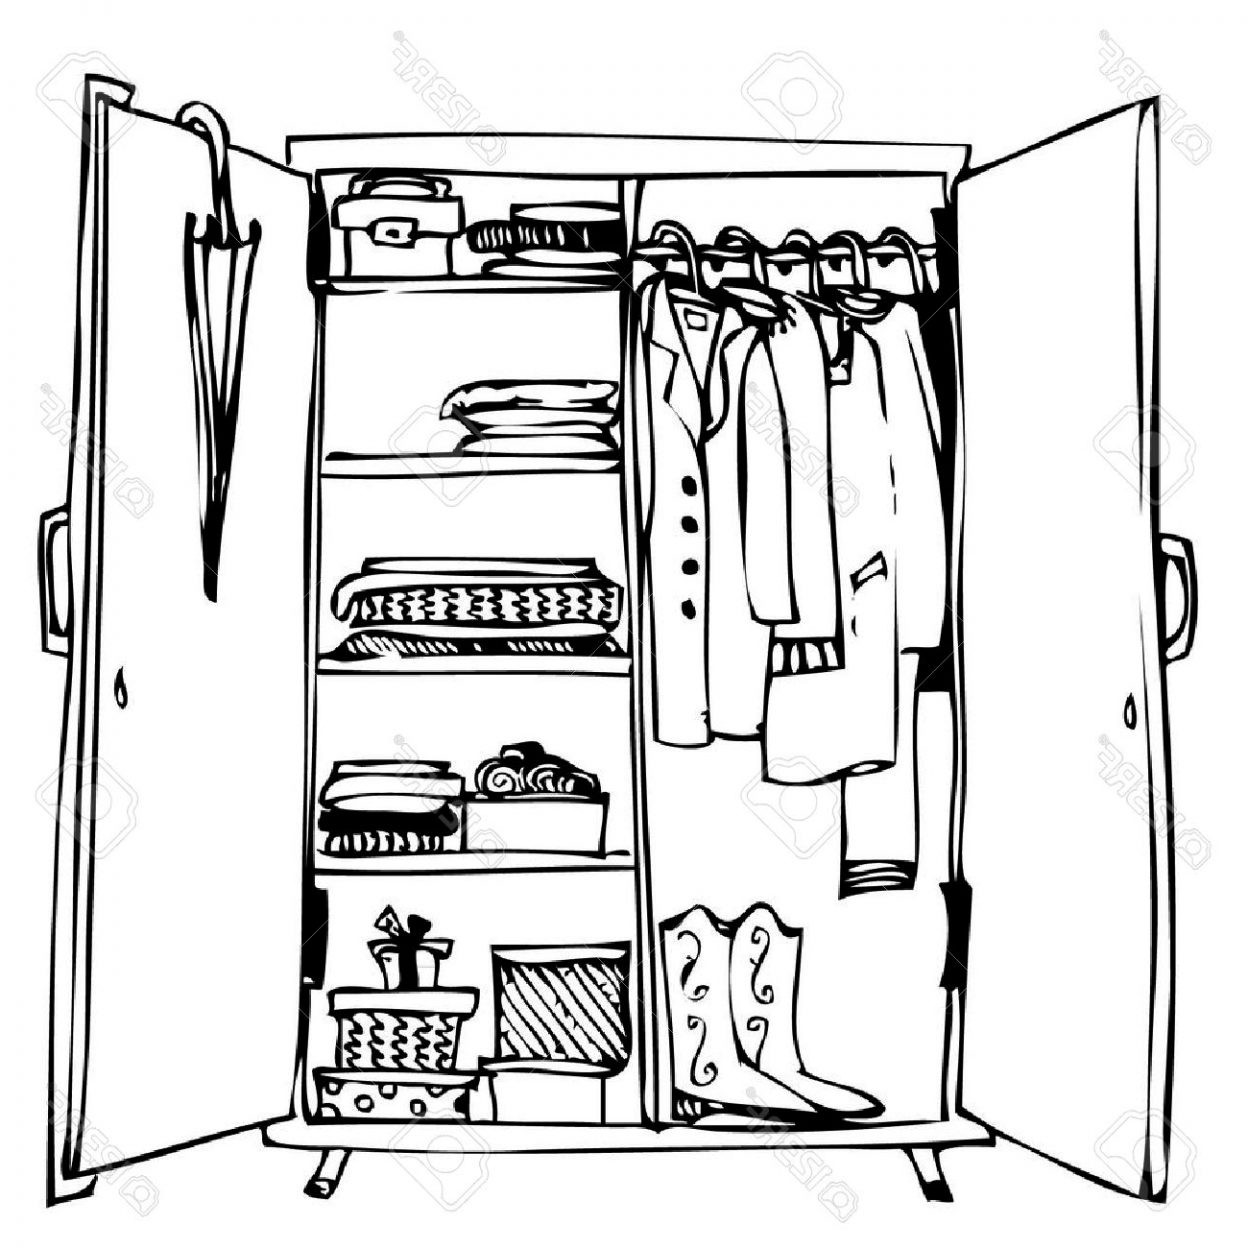 ontour line drawing of closetg